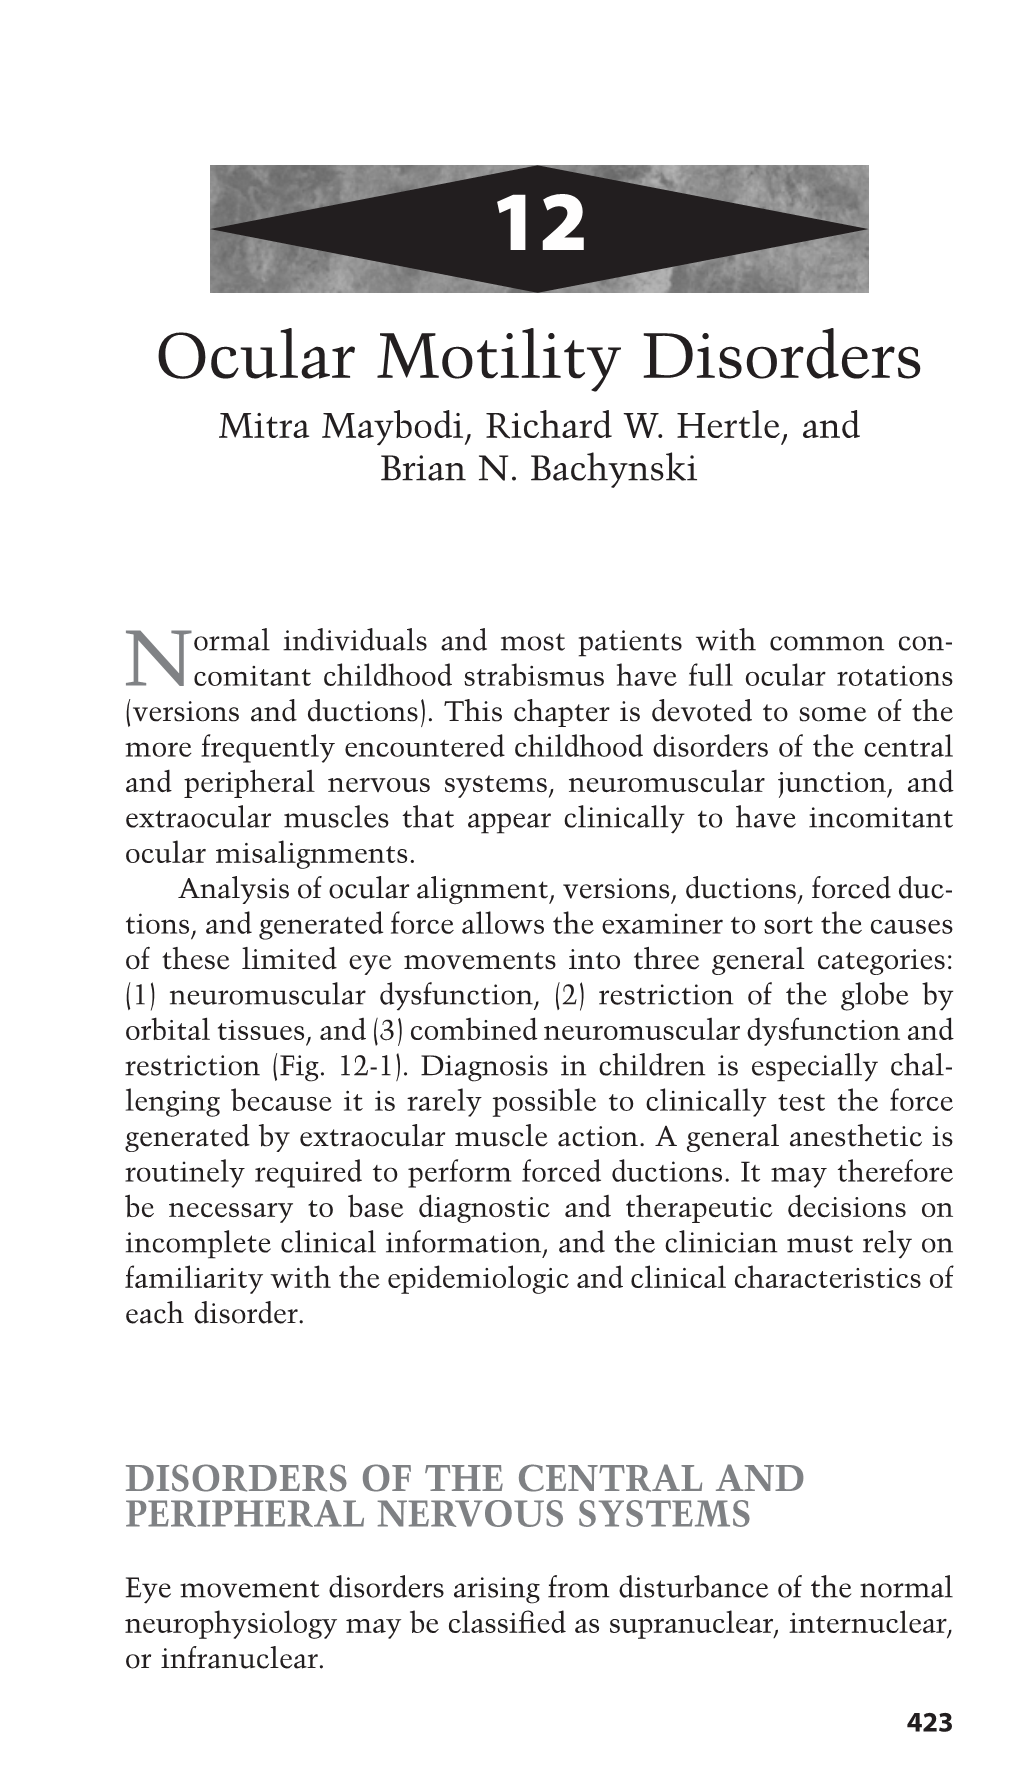 Ocular Motility Disorders Mitra Maybodi, Richard W